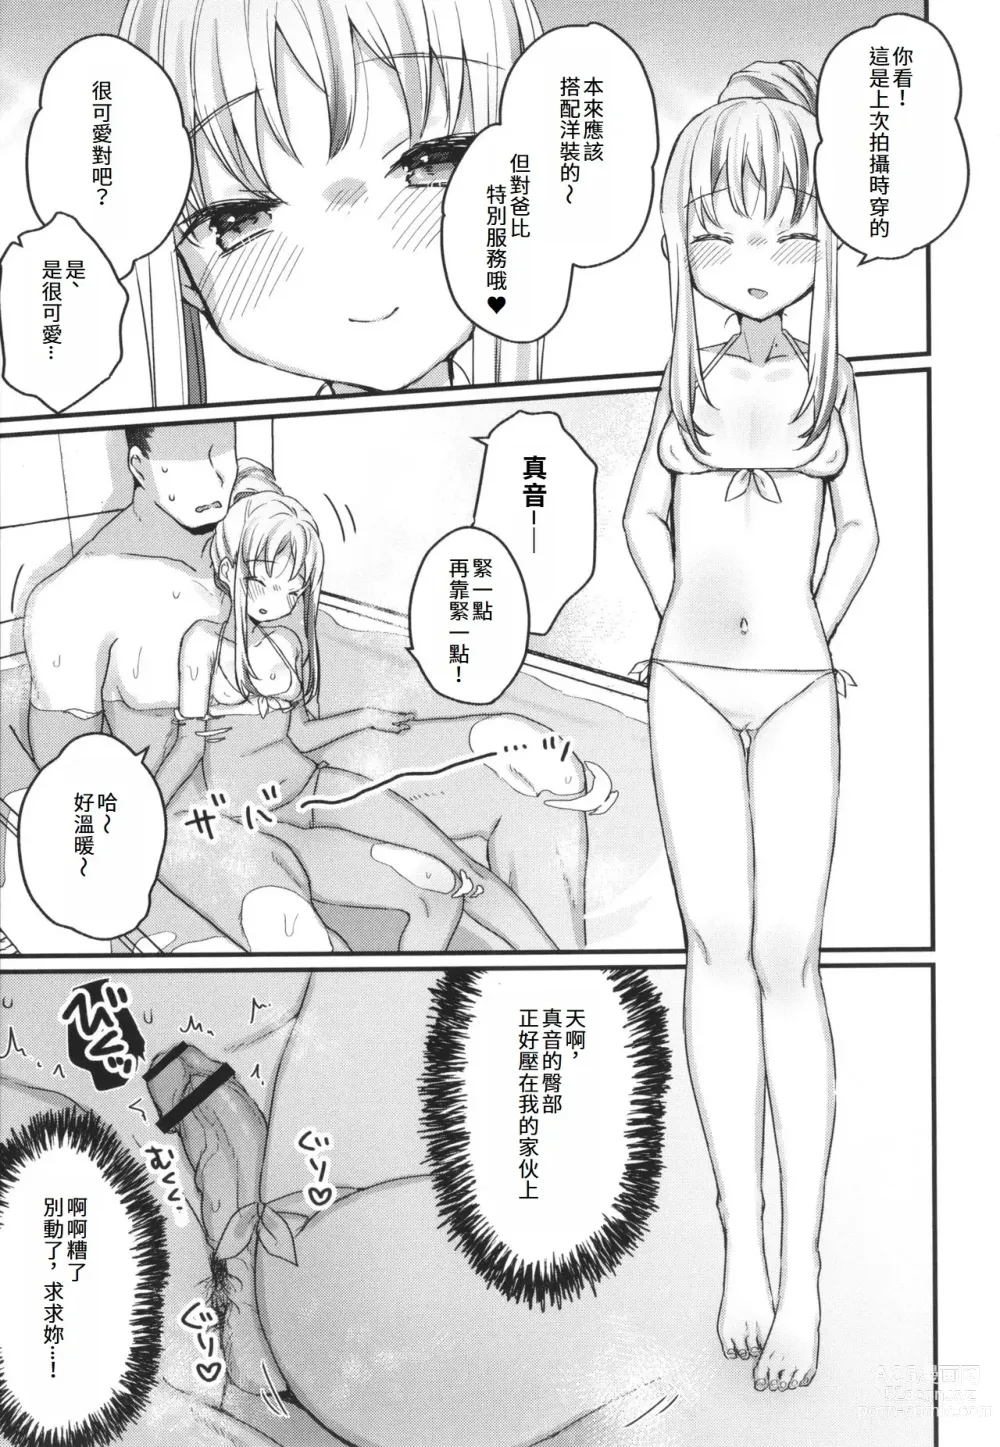 Page 7 of manga 催眠治療太有效了